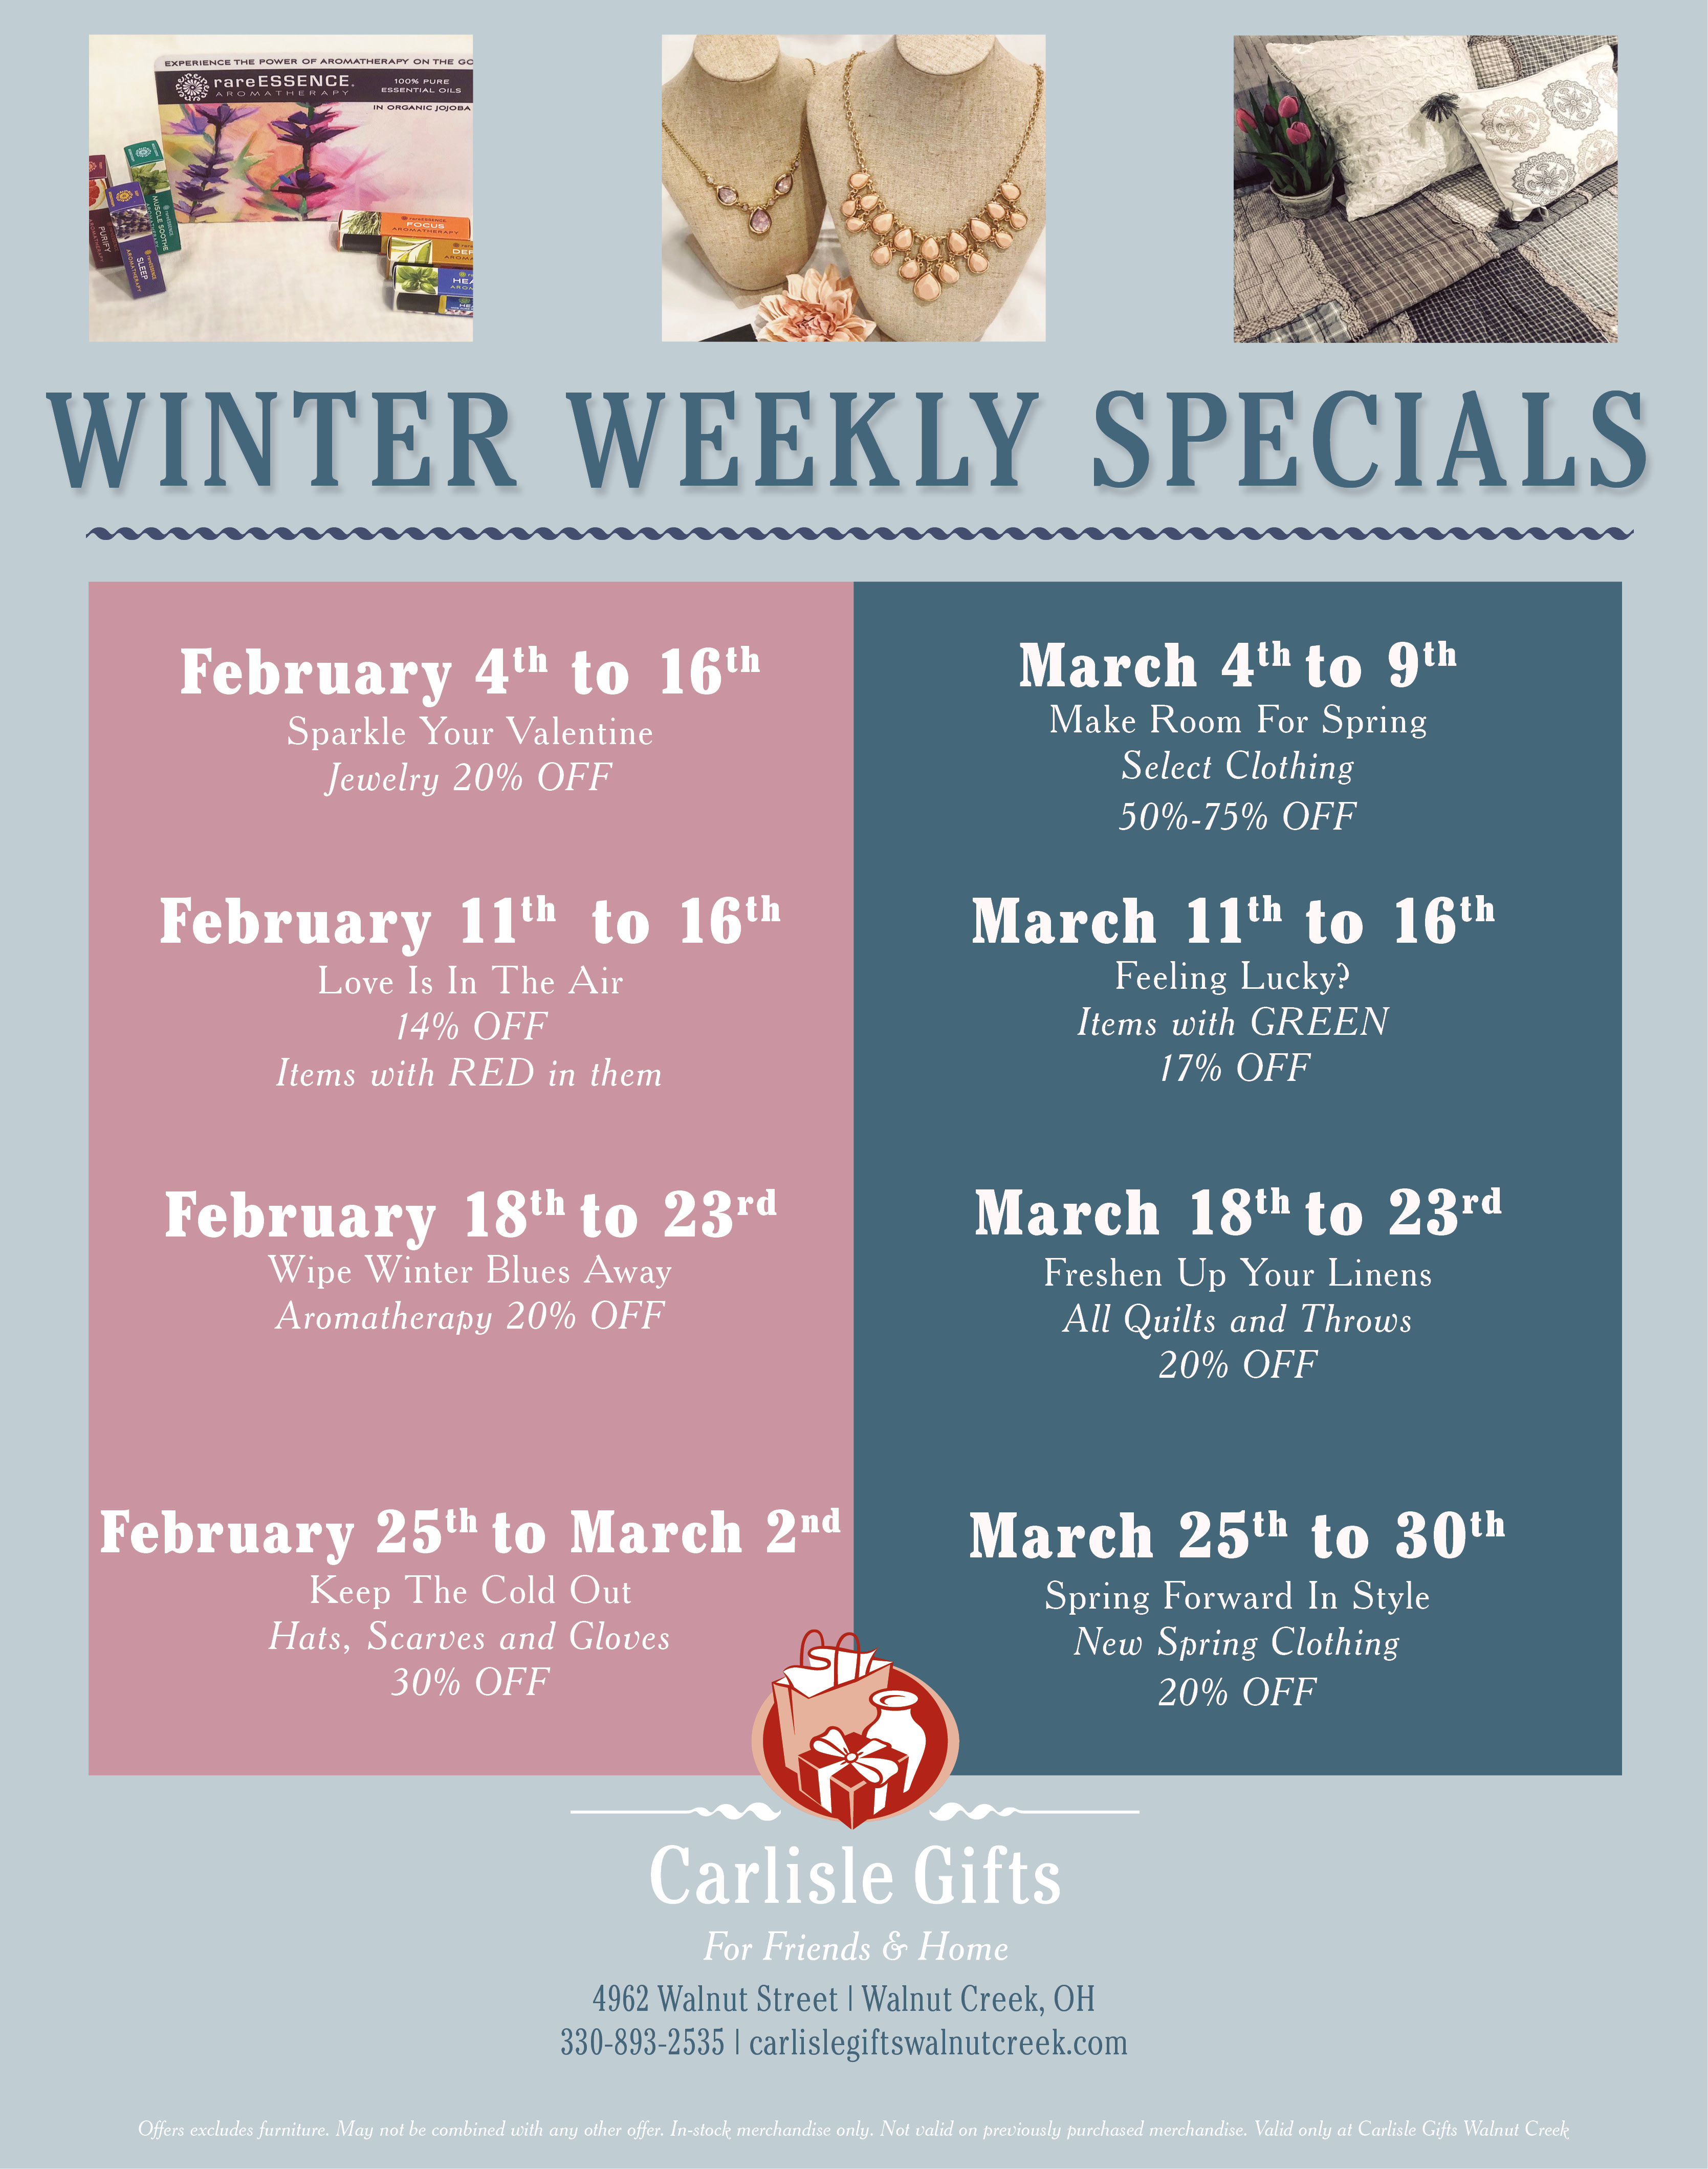 Carlisle Gifts' Winter Weekly Specials